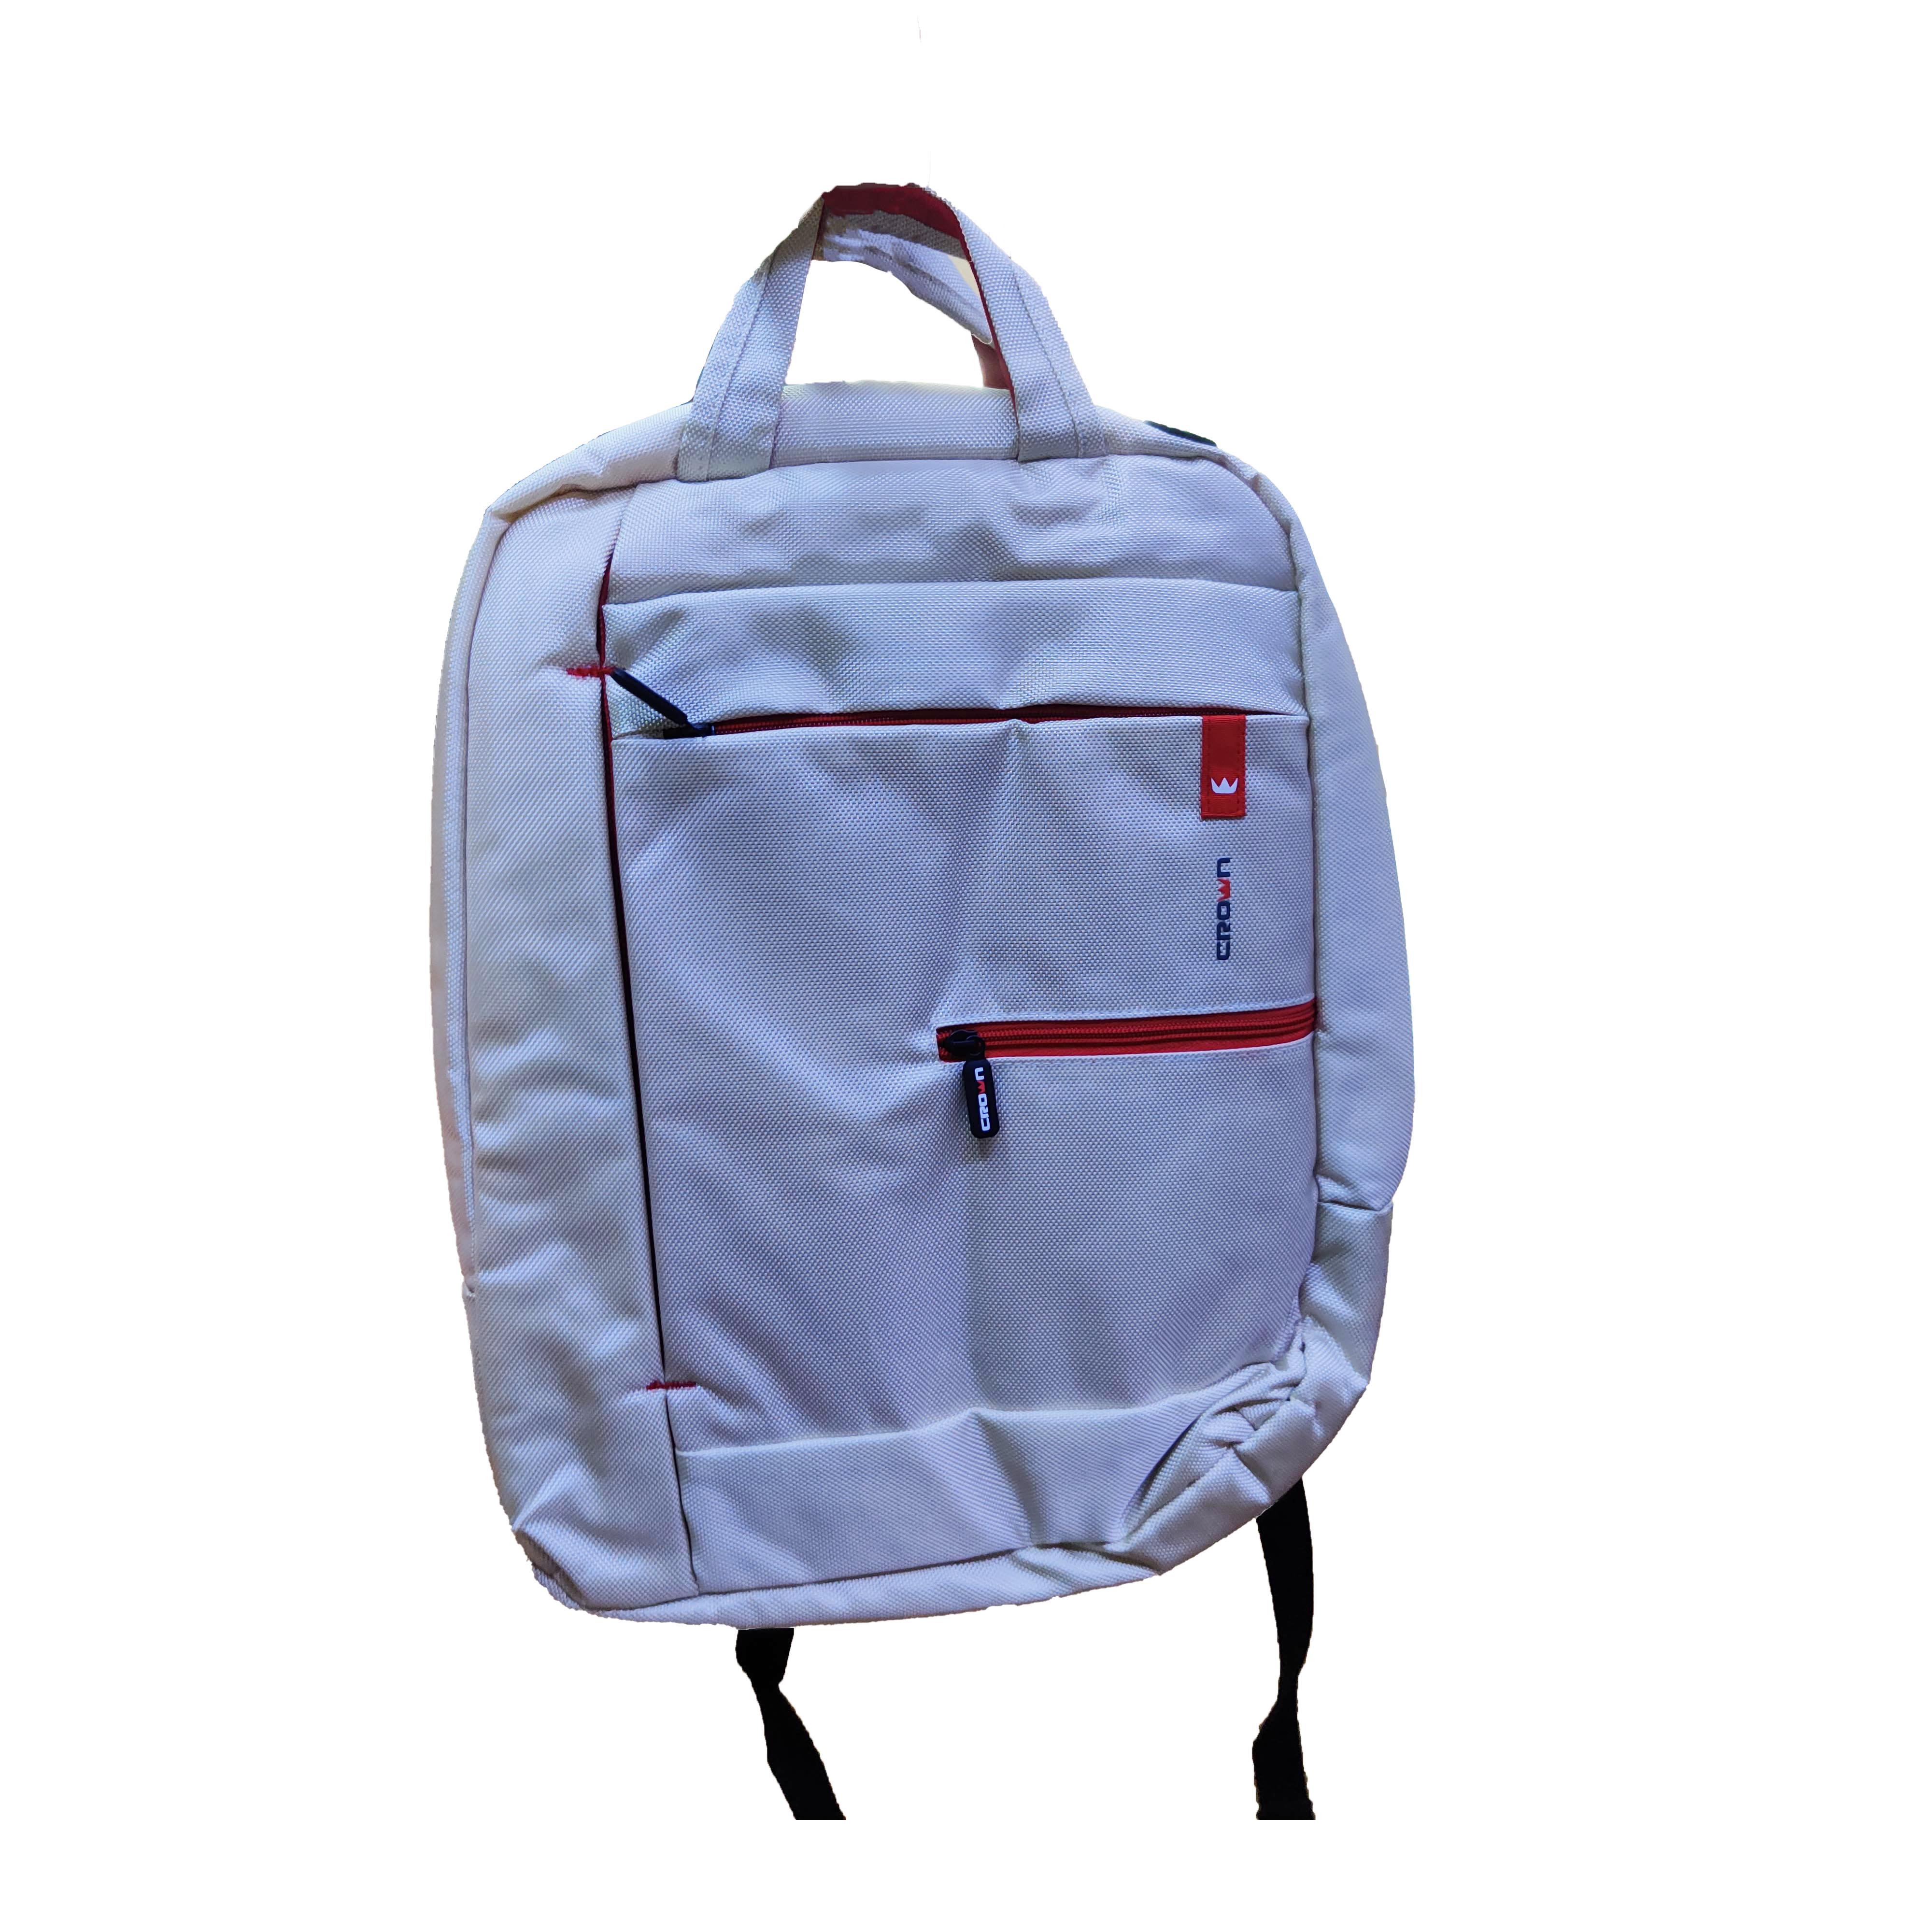 NOTEBOOK BACK BAG 15.6 CROWN WHITE ظهر ,Laptop Bag